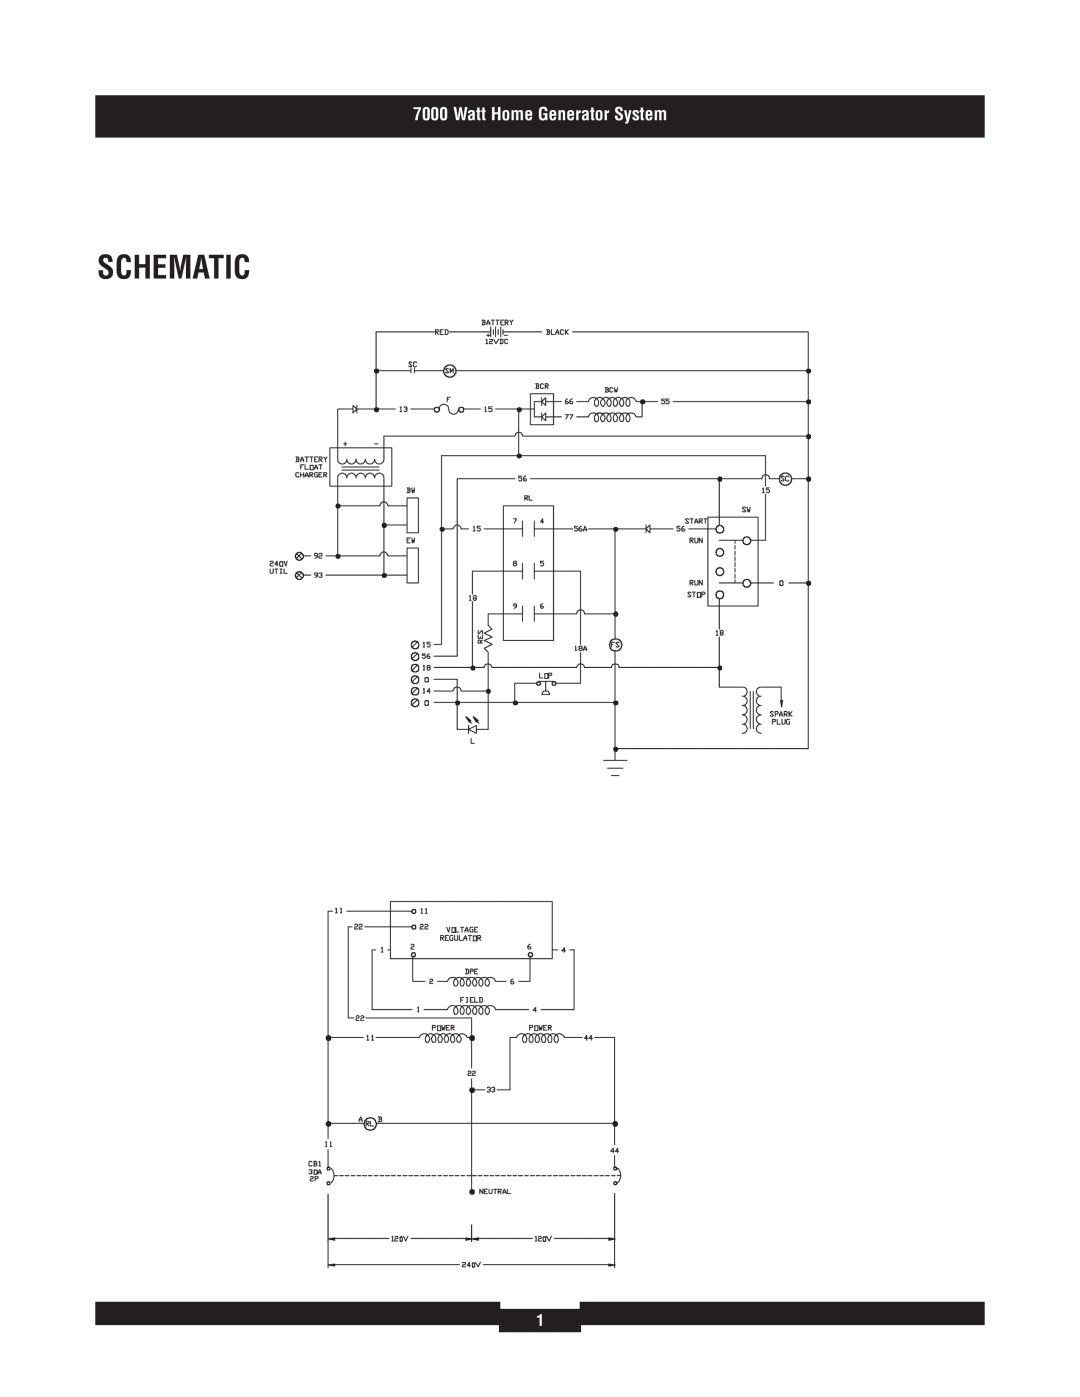 Briggs & Stratton 030372 manual Schematic, Watt Home Generator System 